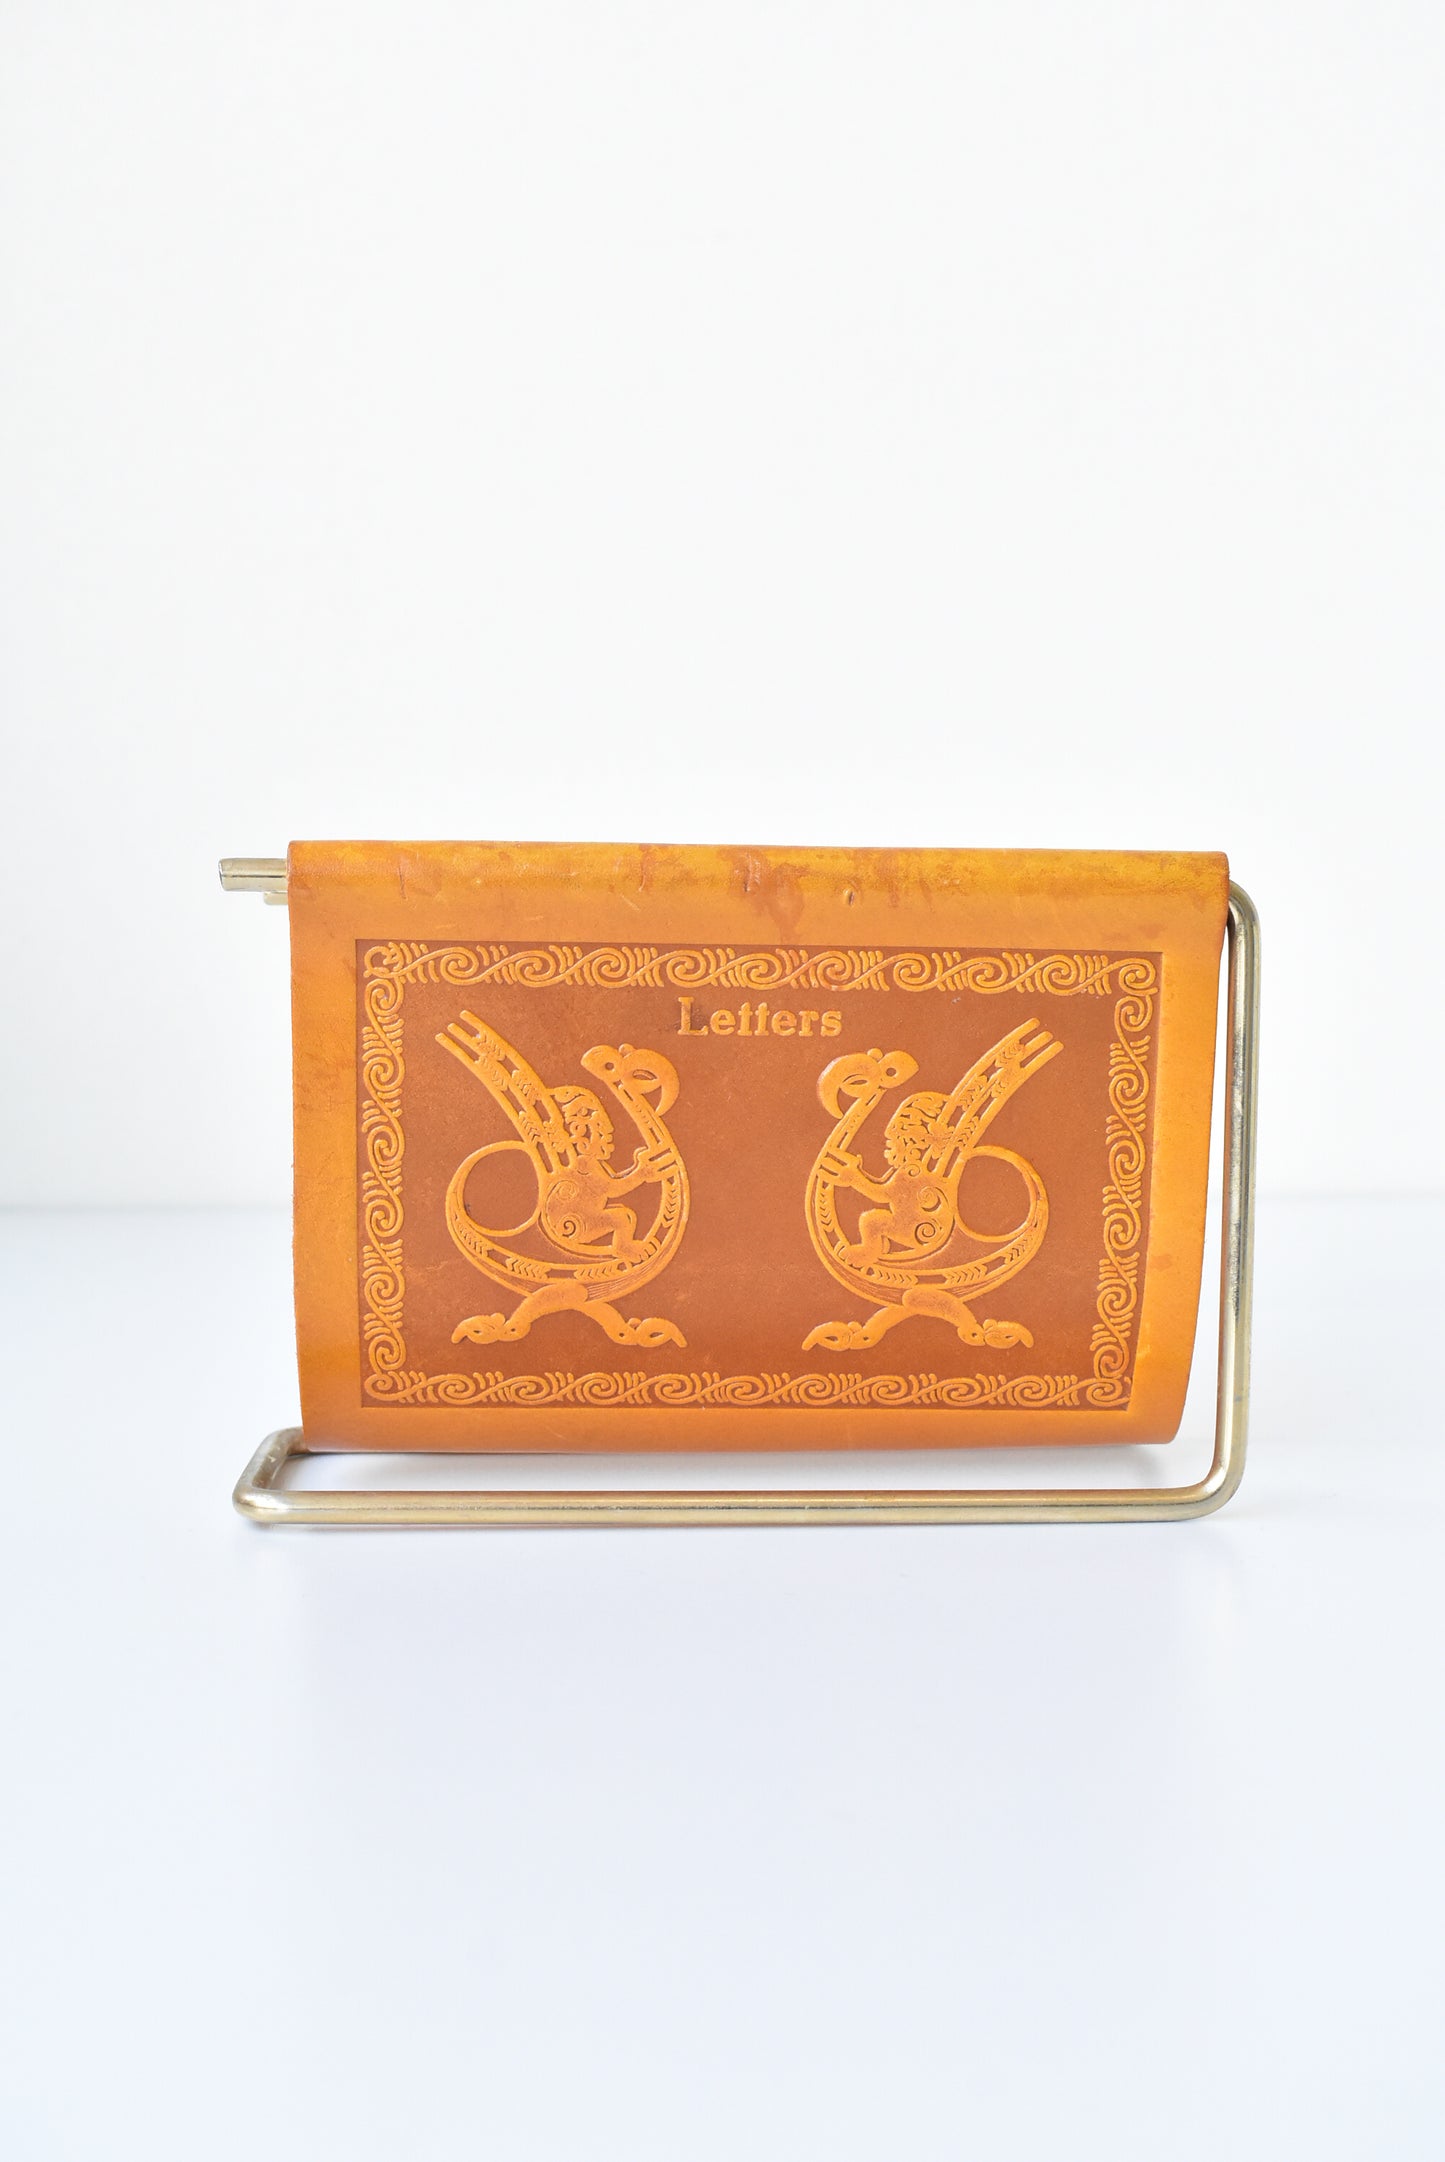 Vintage Kiwiana debossed leather letter holder